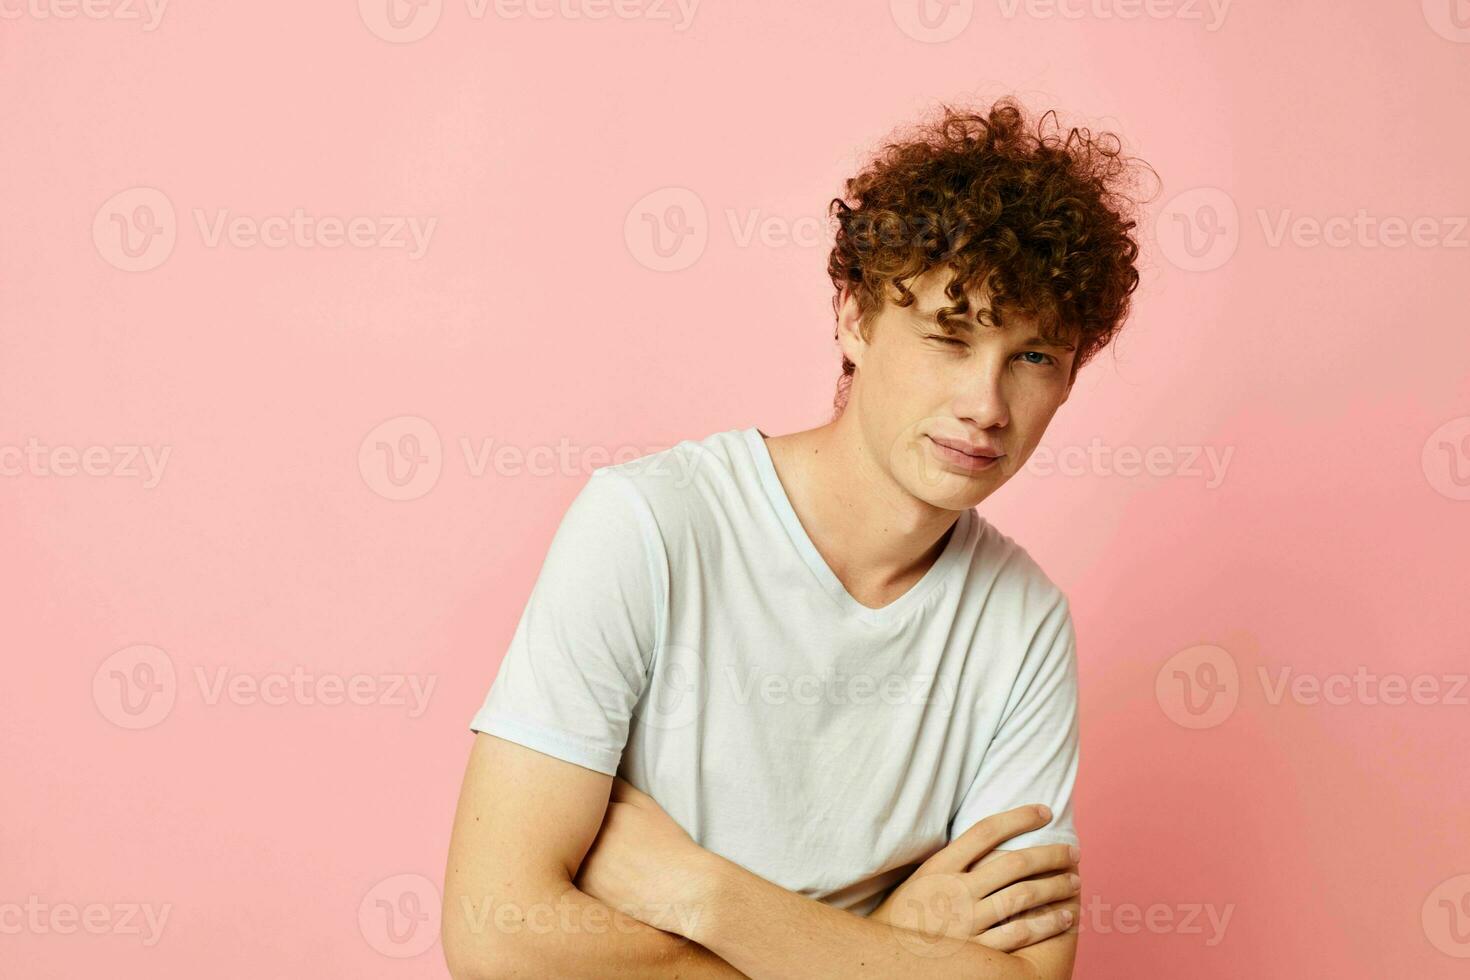 joven pelo rizado hombre verano ropa blanco camiseta posando aislado antecedentes inalterado foto